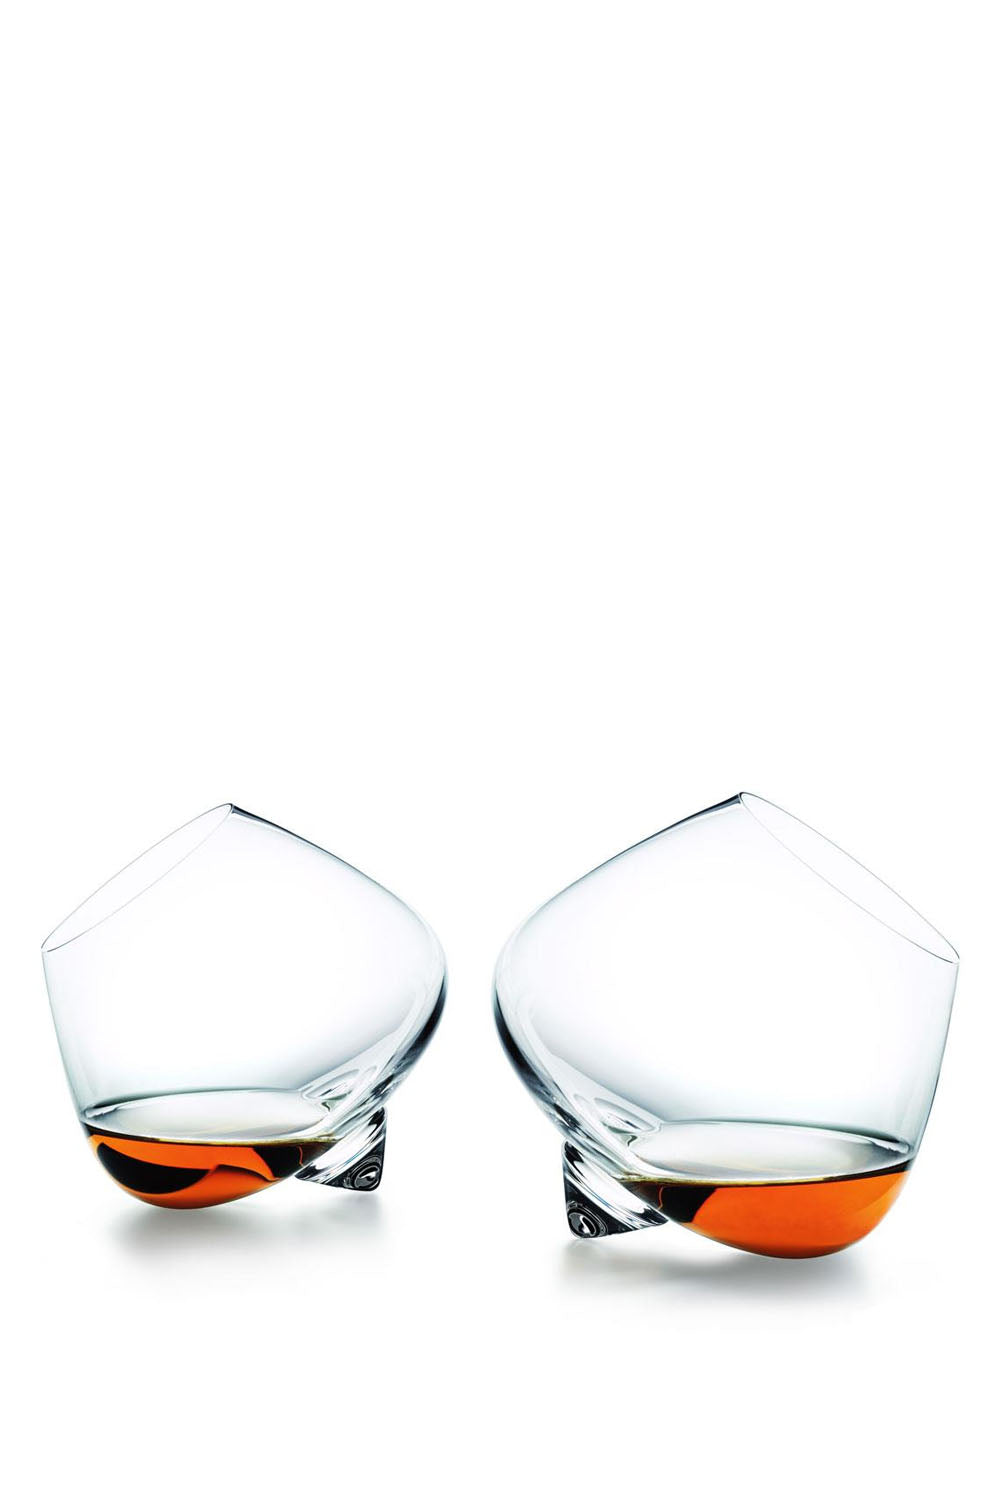 Cognac Glass, 250ml, Set of 2